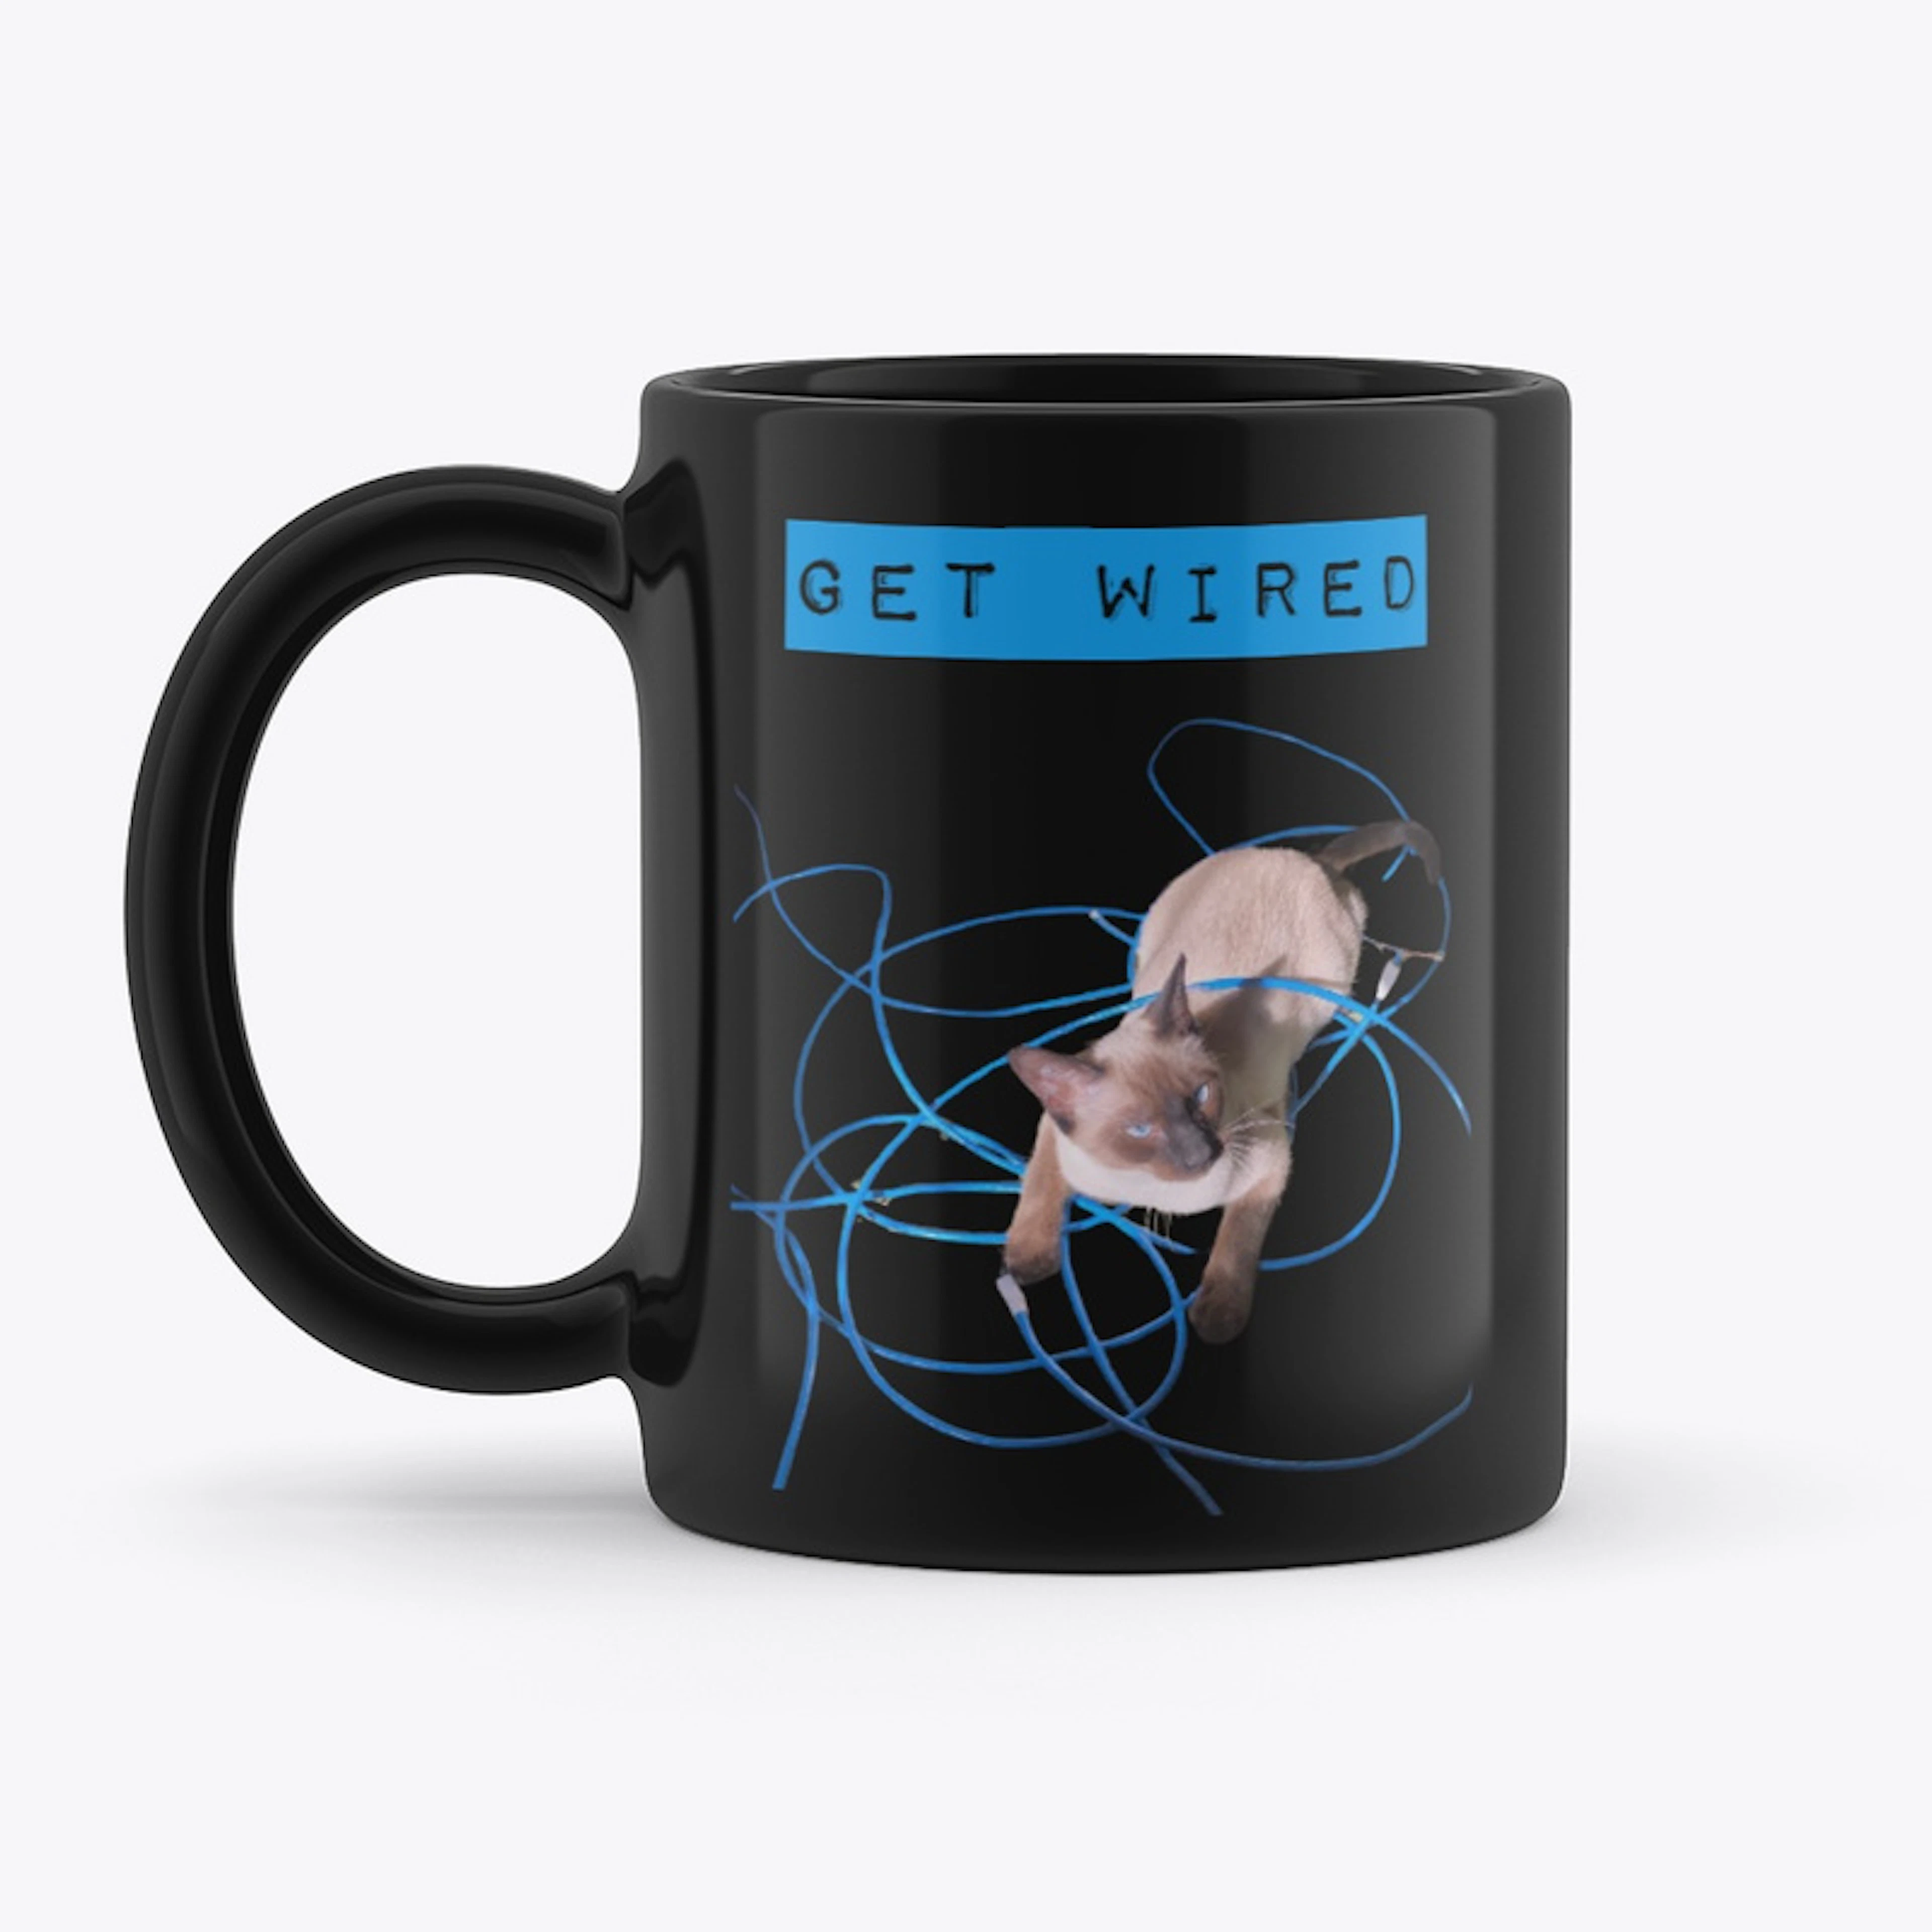 Get Wired Mug